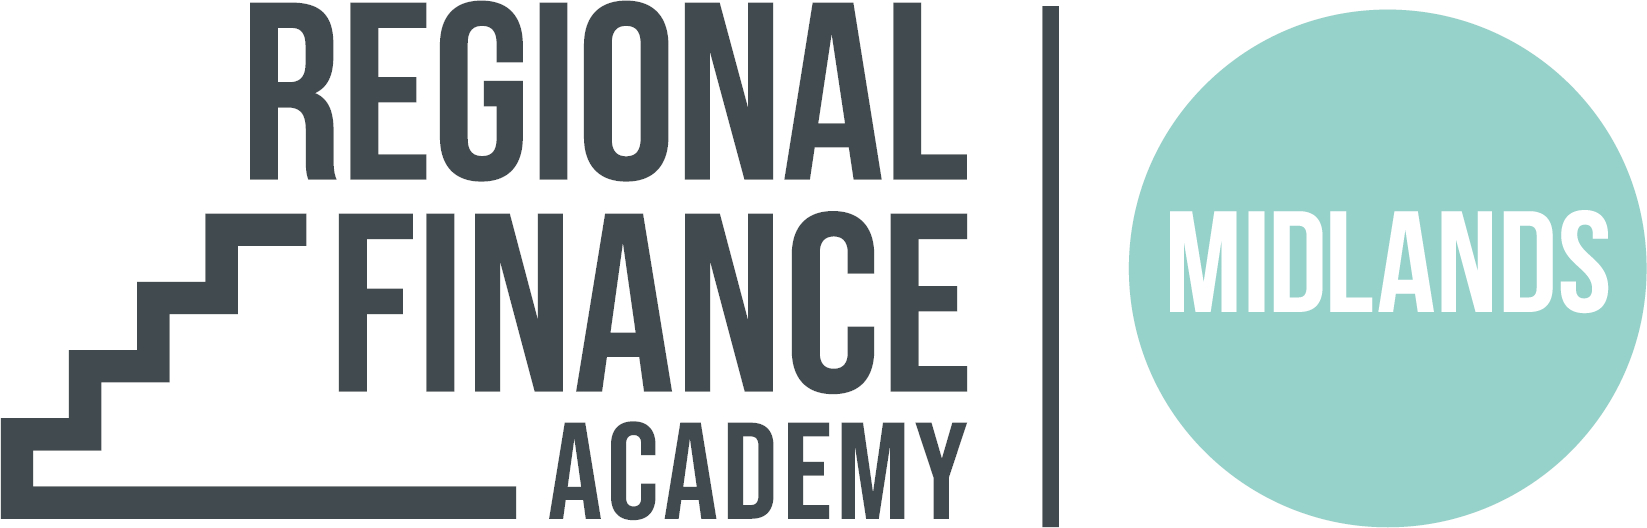 One NHS Finance - Midlands Academy logo